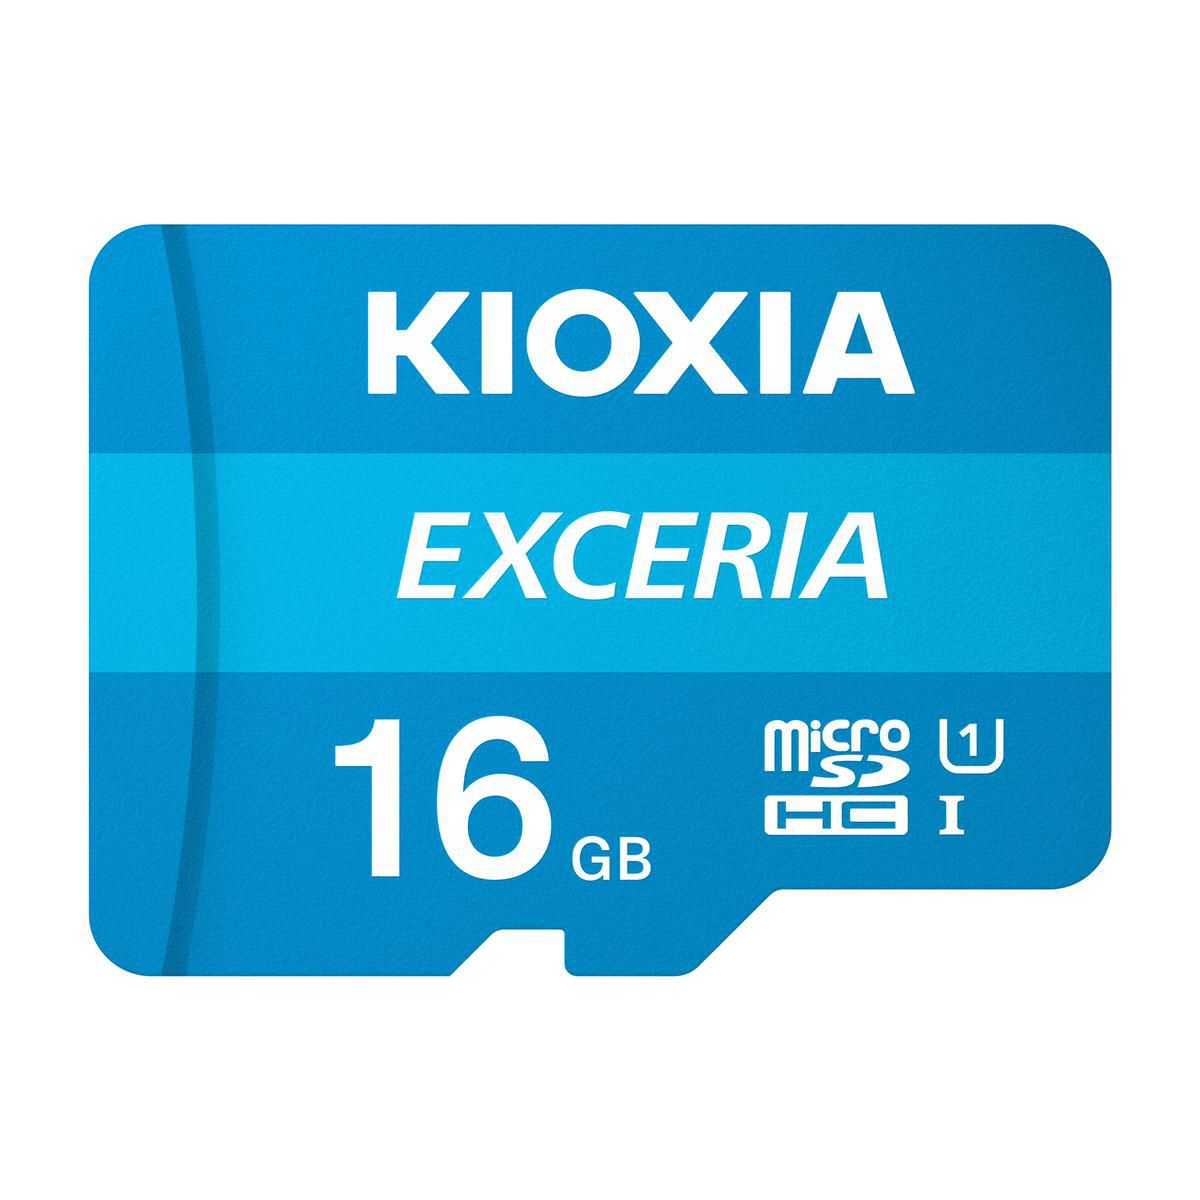 KIOXIA LMEX1L016GG2 W128275535 Exceria 16 Gb Microsdhc Uhs-I 